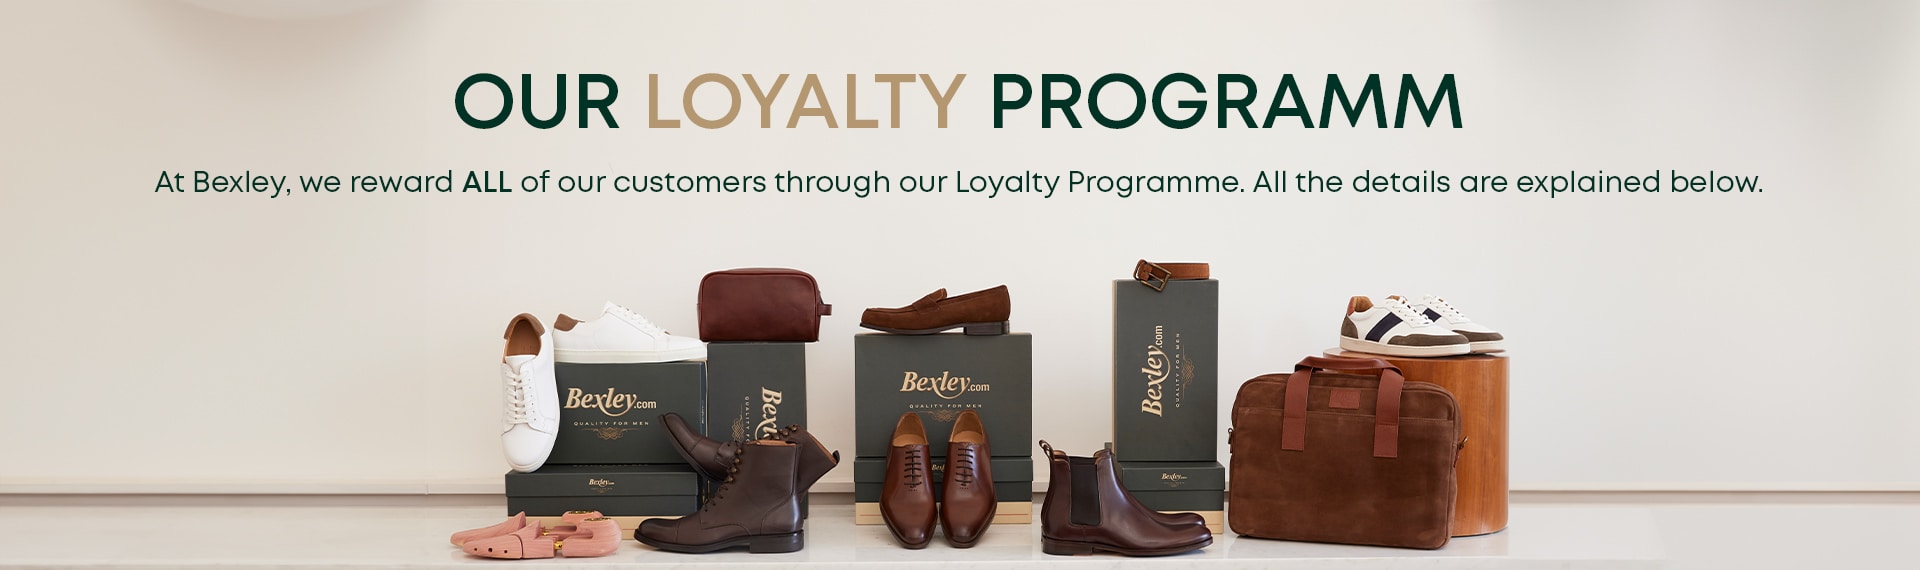 loyalty programm